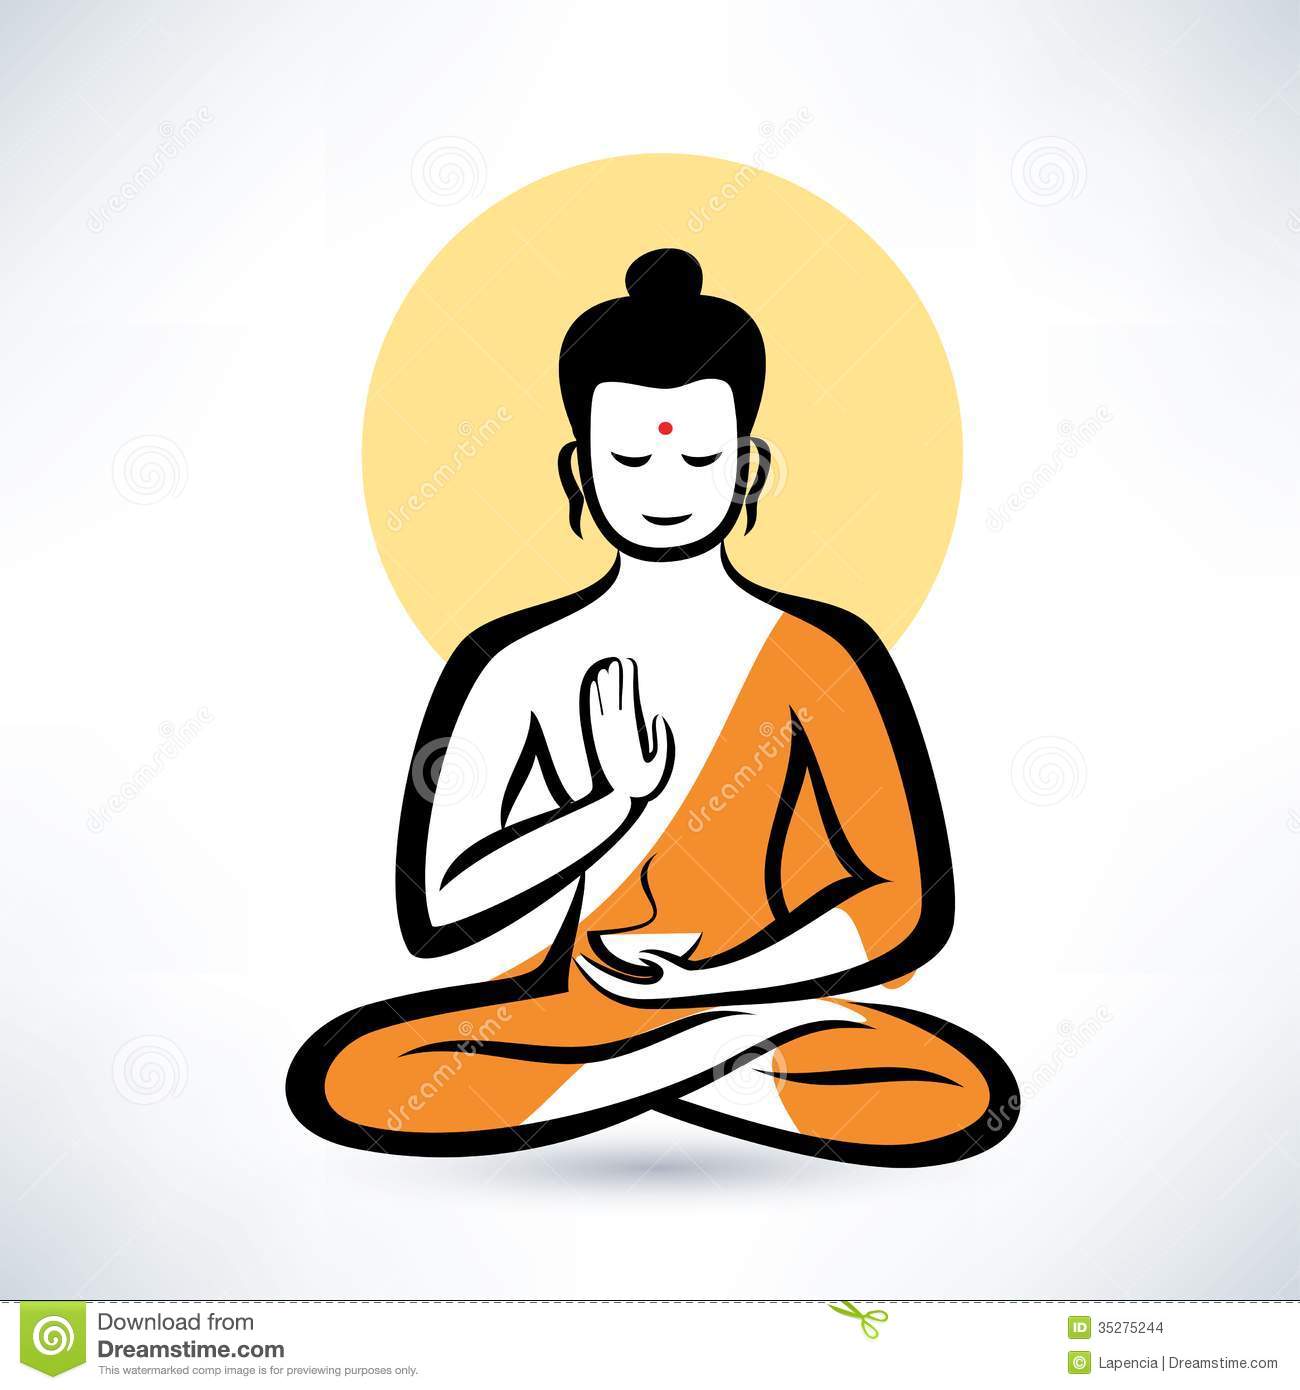 Buddha clipart meditation, Buddha meditation Transparent